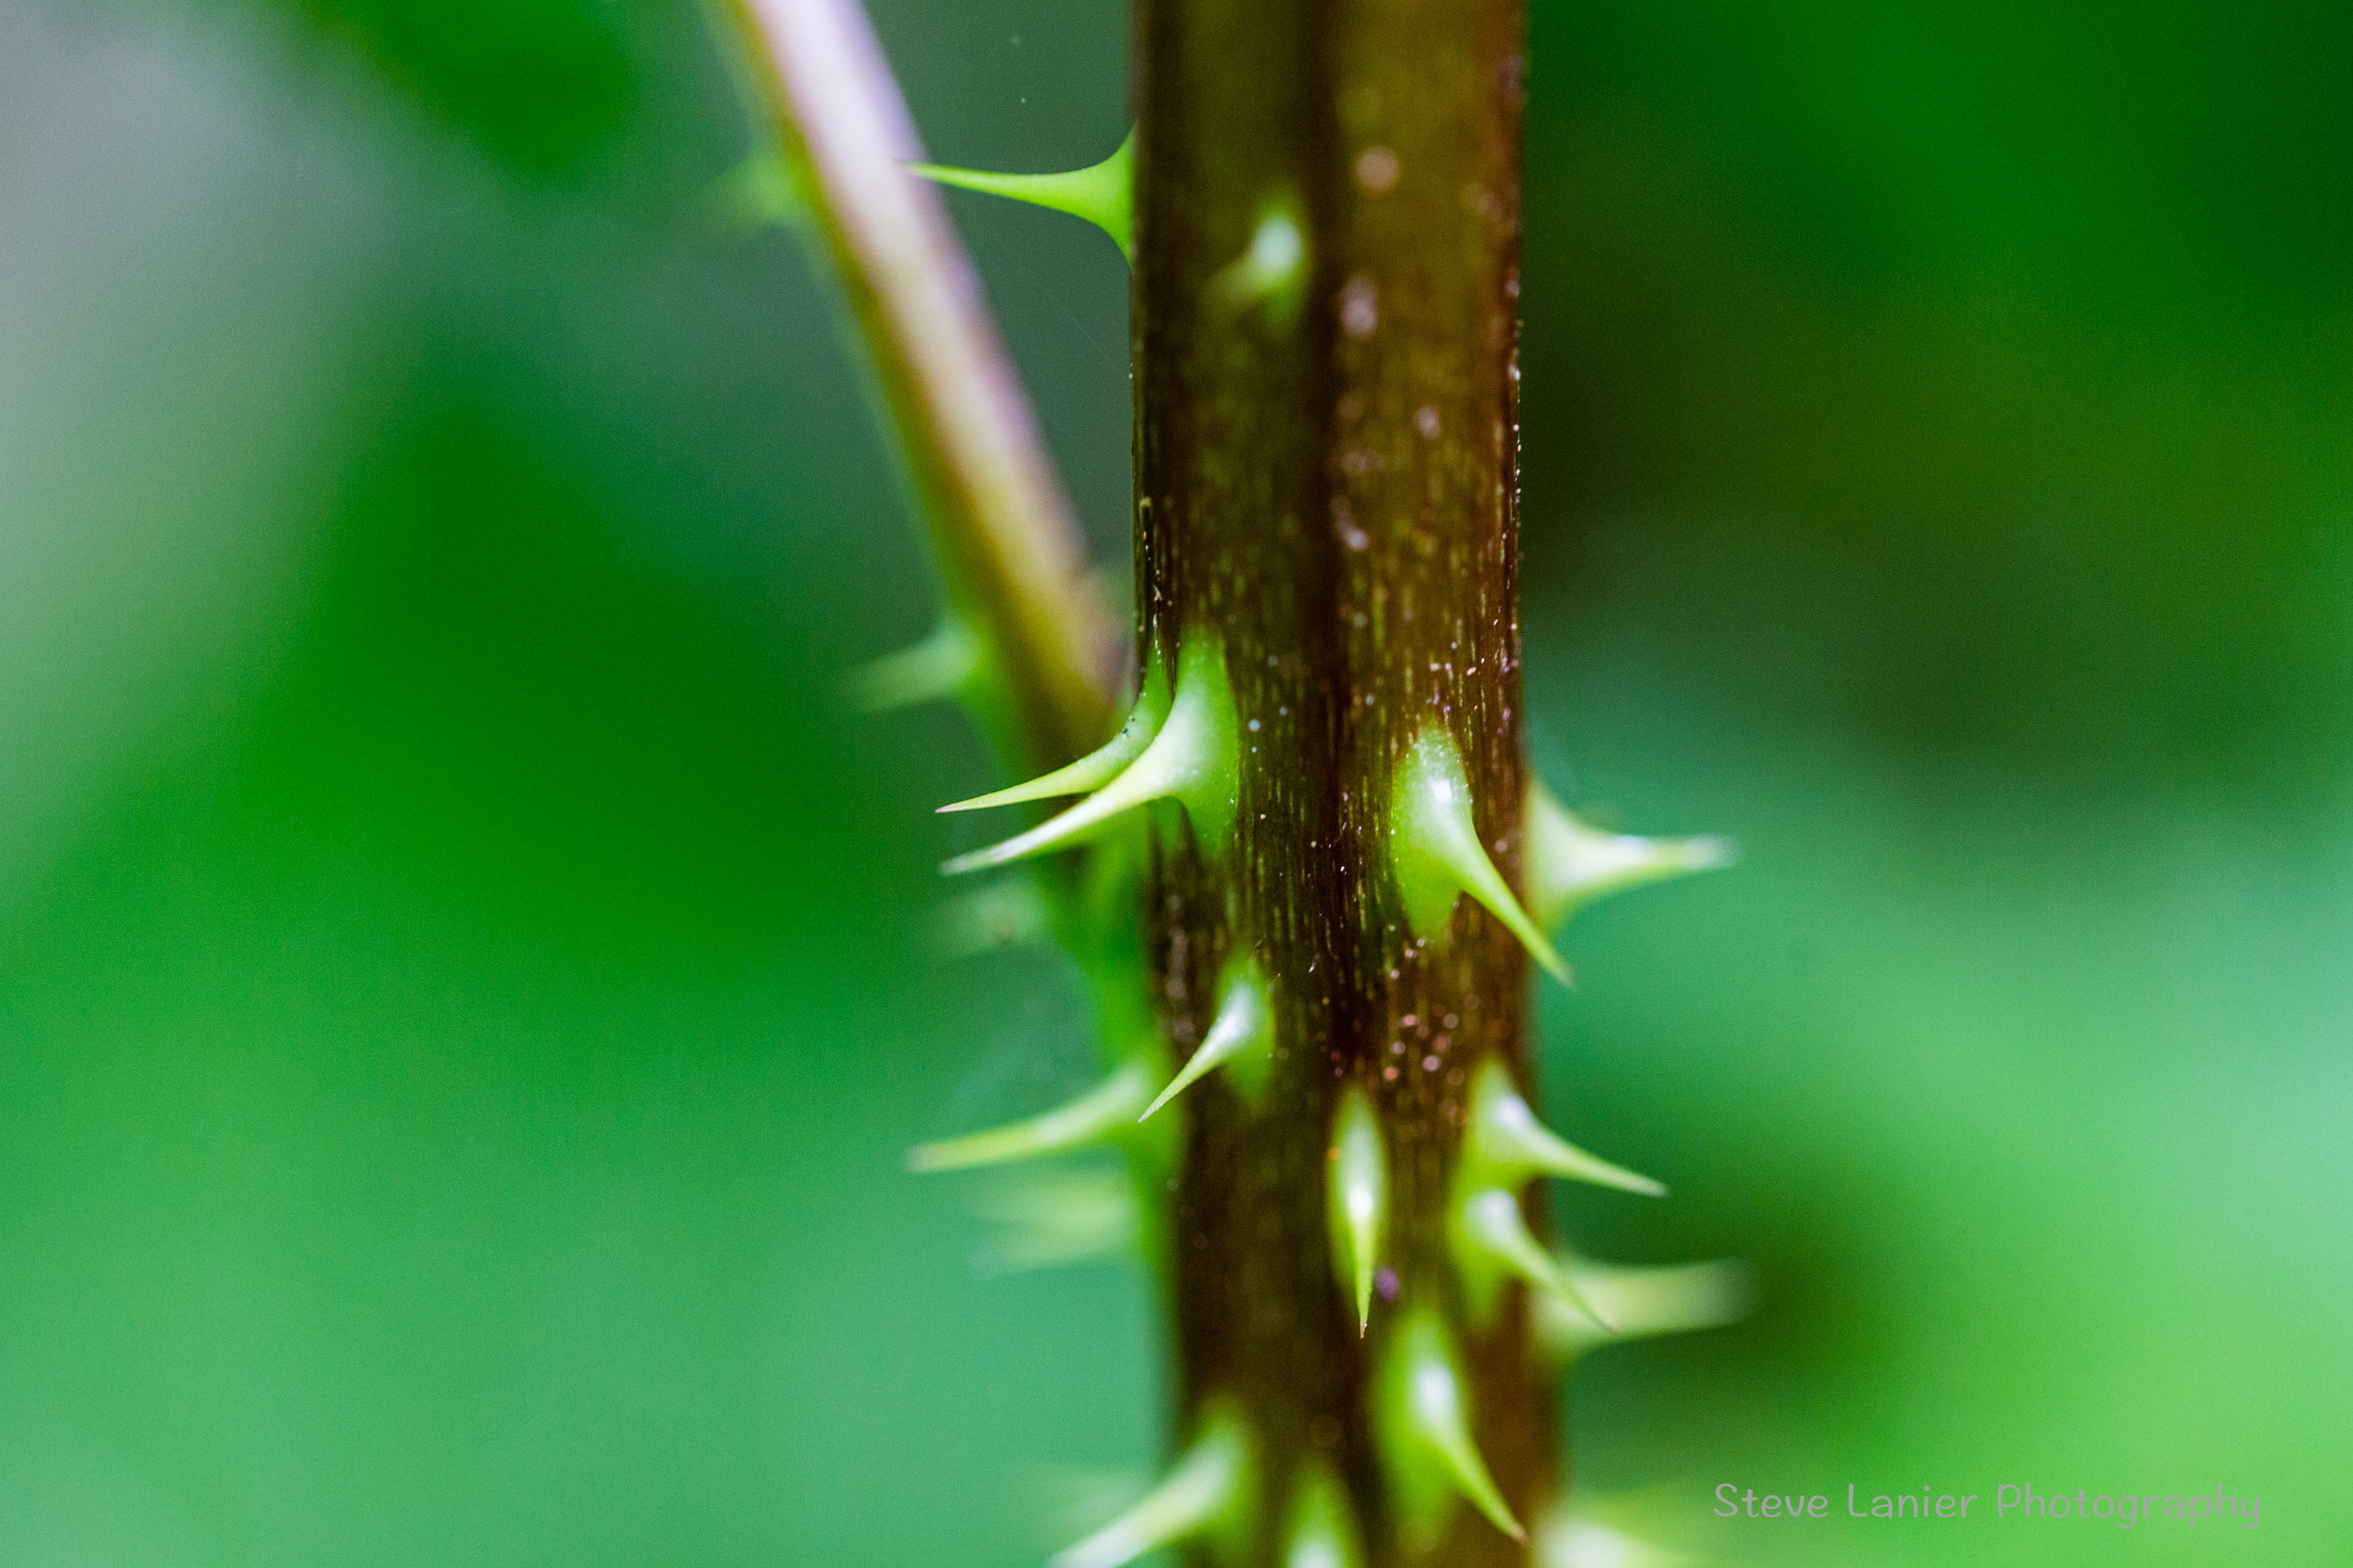 New Thorns on Salmonberry Stalk